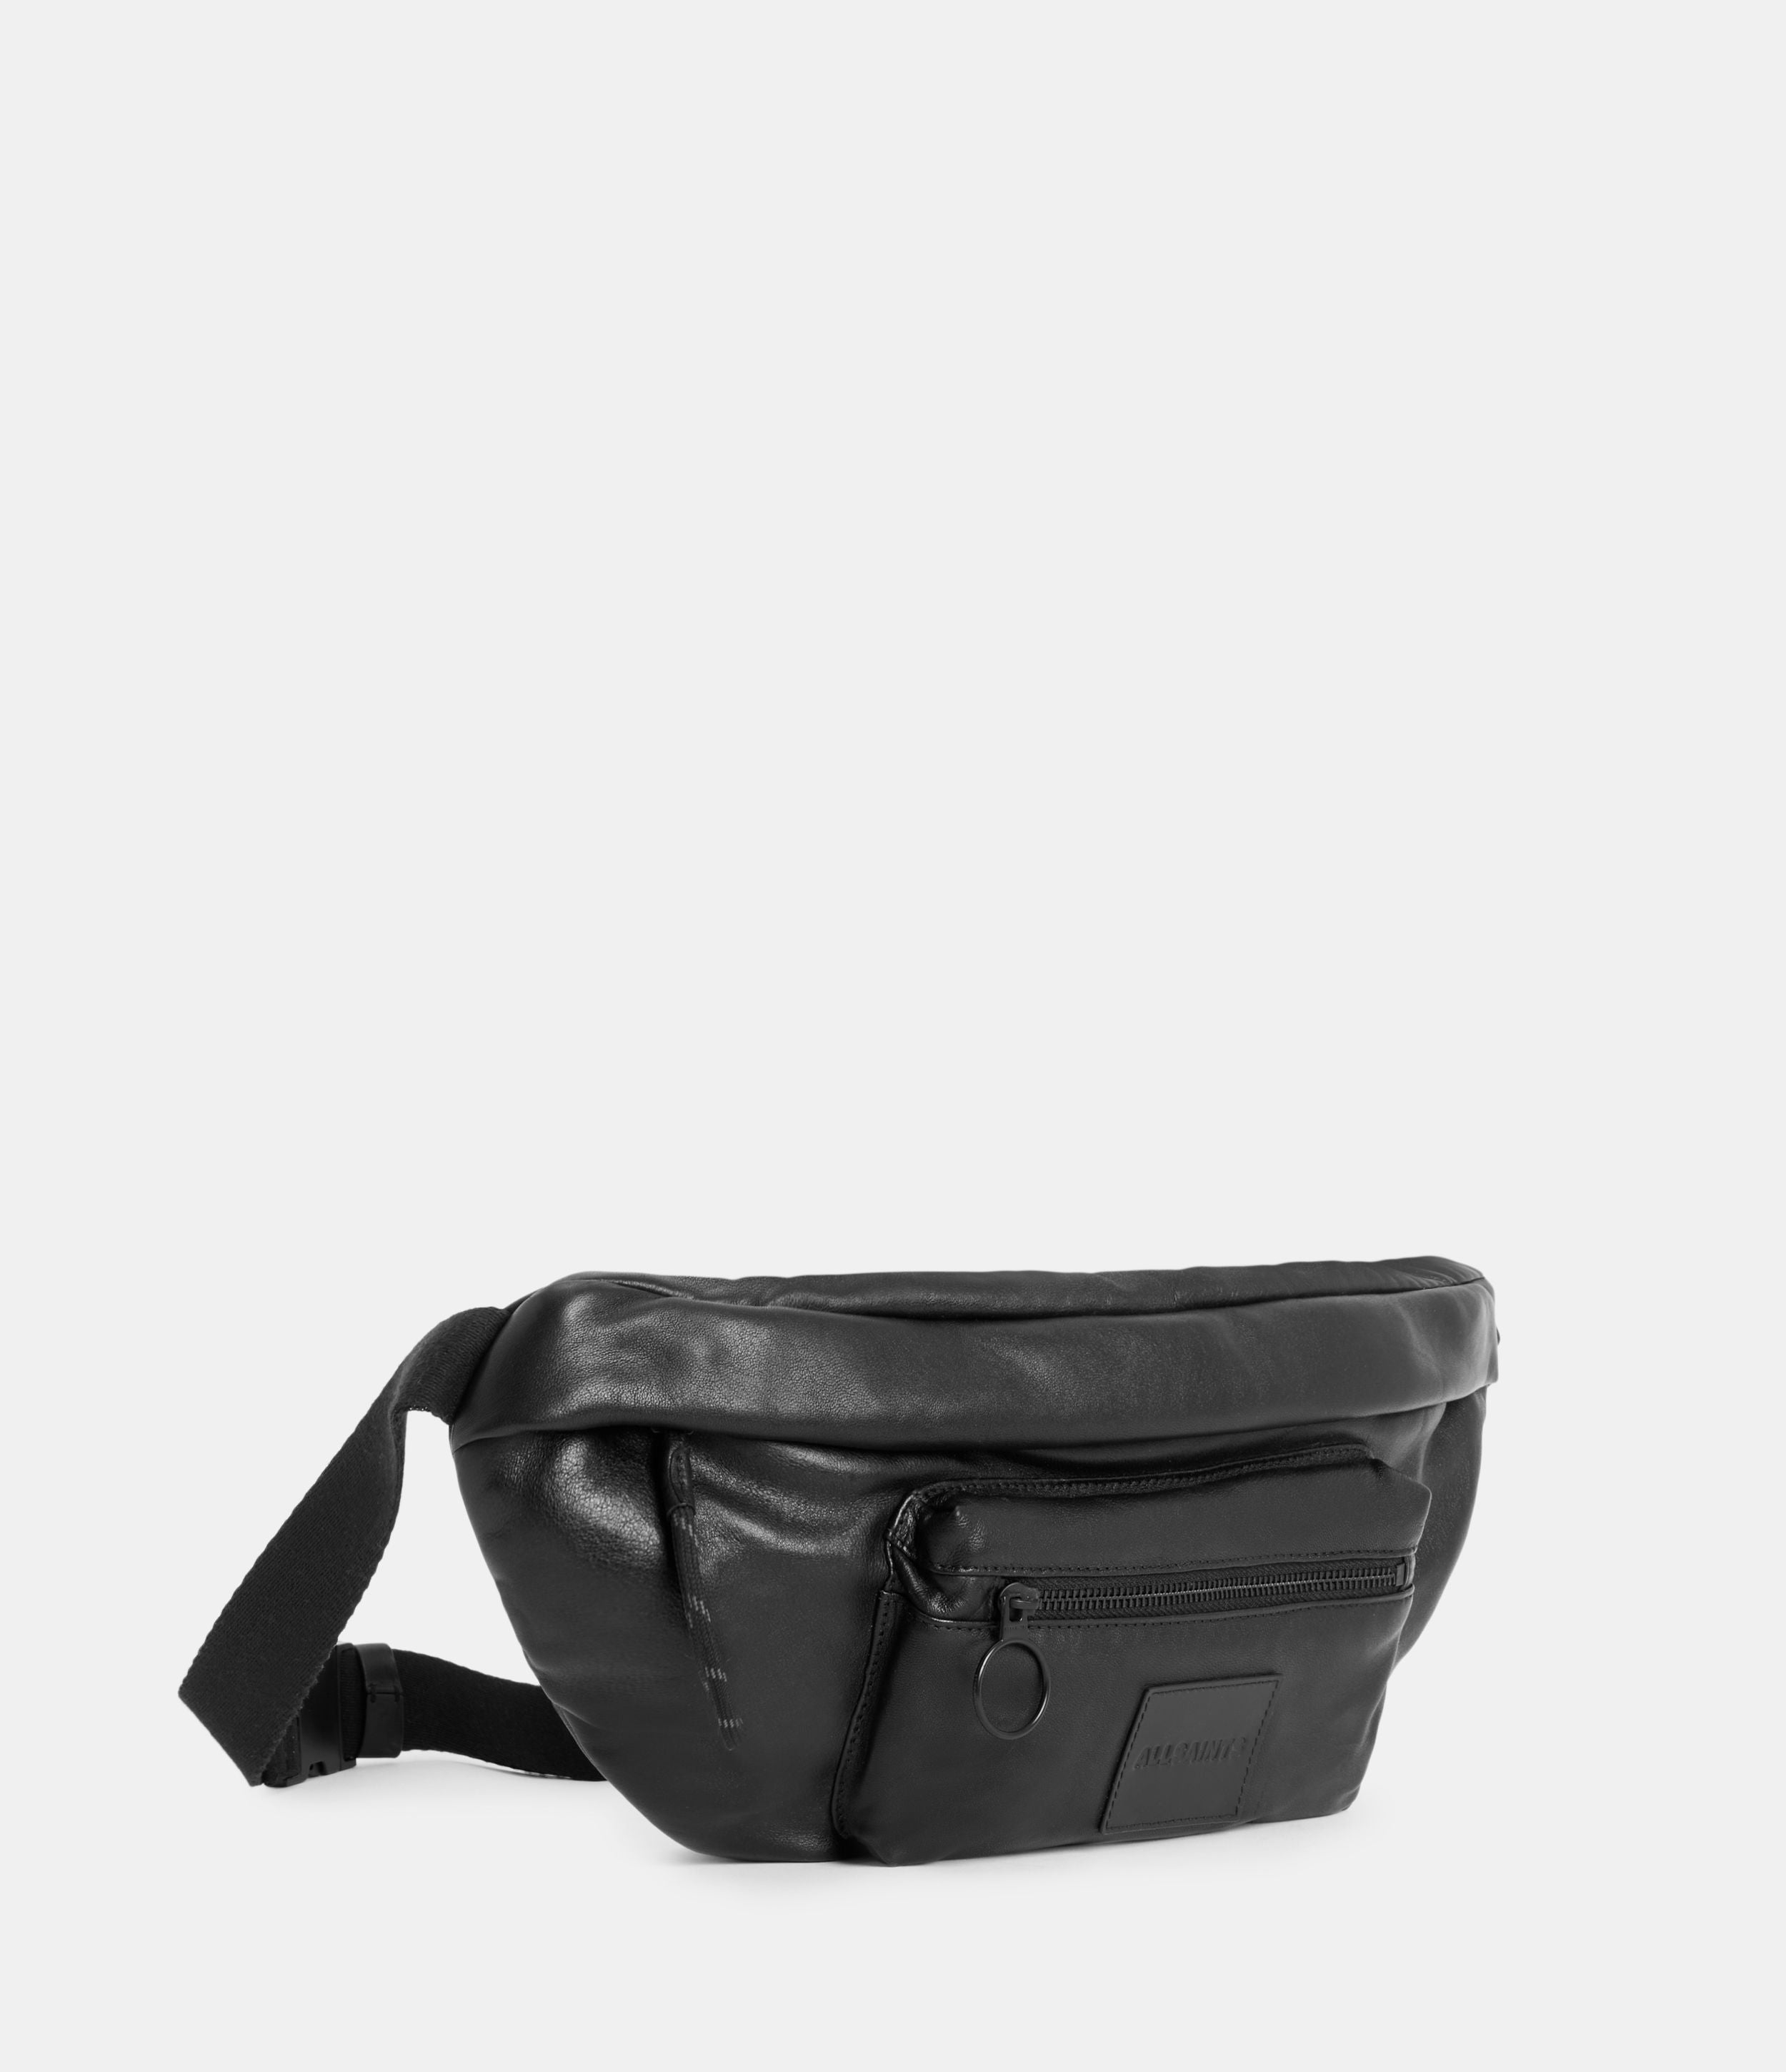 Ronin Leather Bum bag